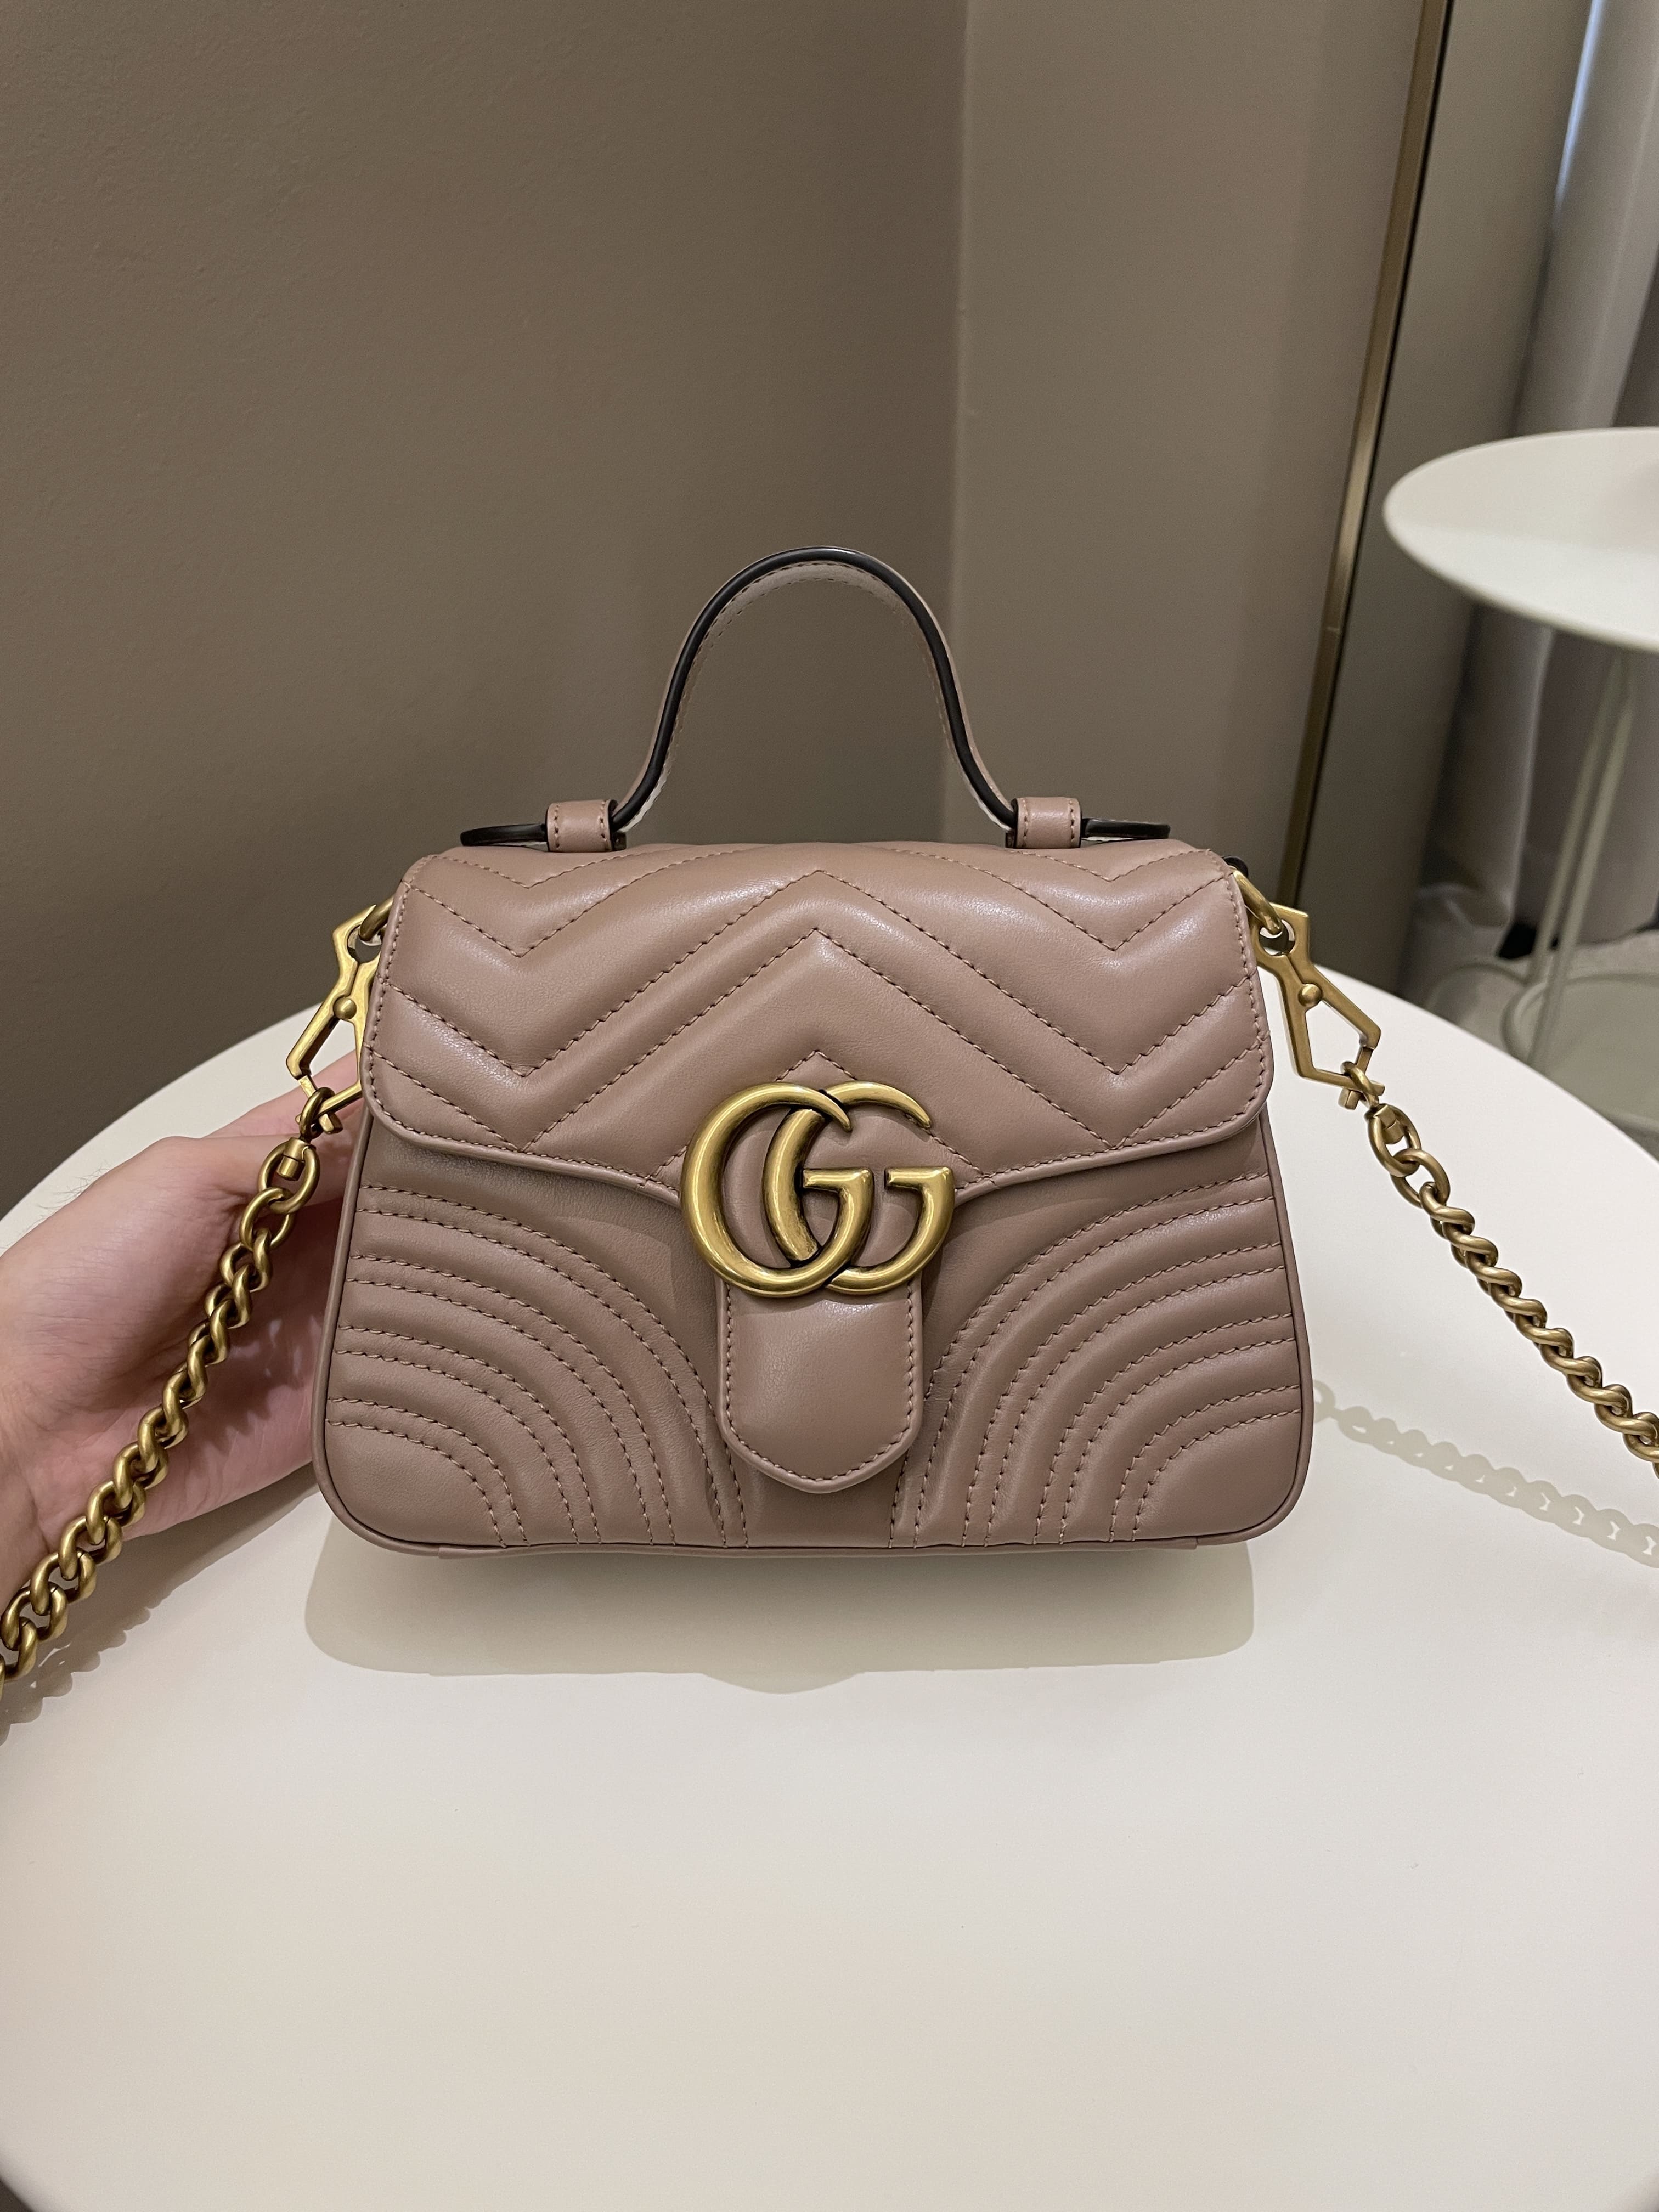 Gucci Small Top Handle Bag